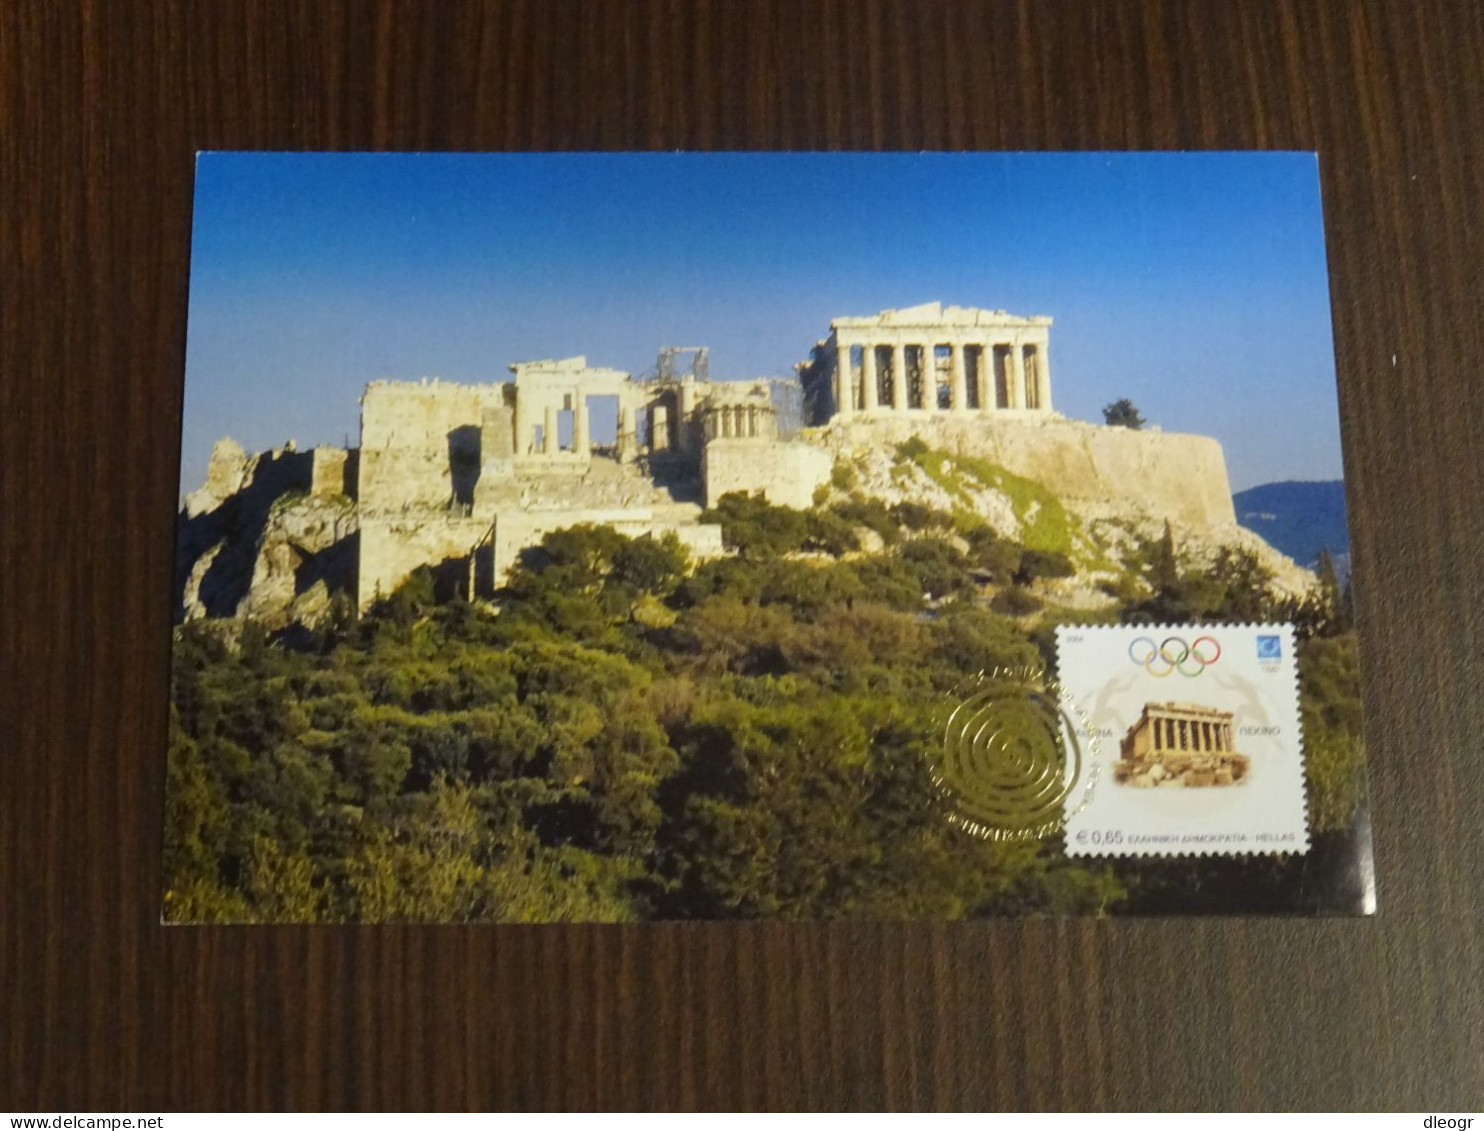 Greece 2004 Athens 2004 Beijing Maximum Card VF - Maximumkaarten